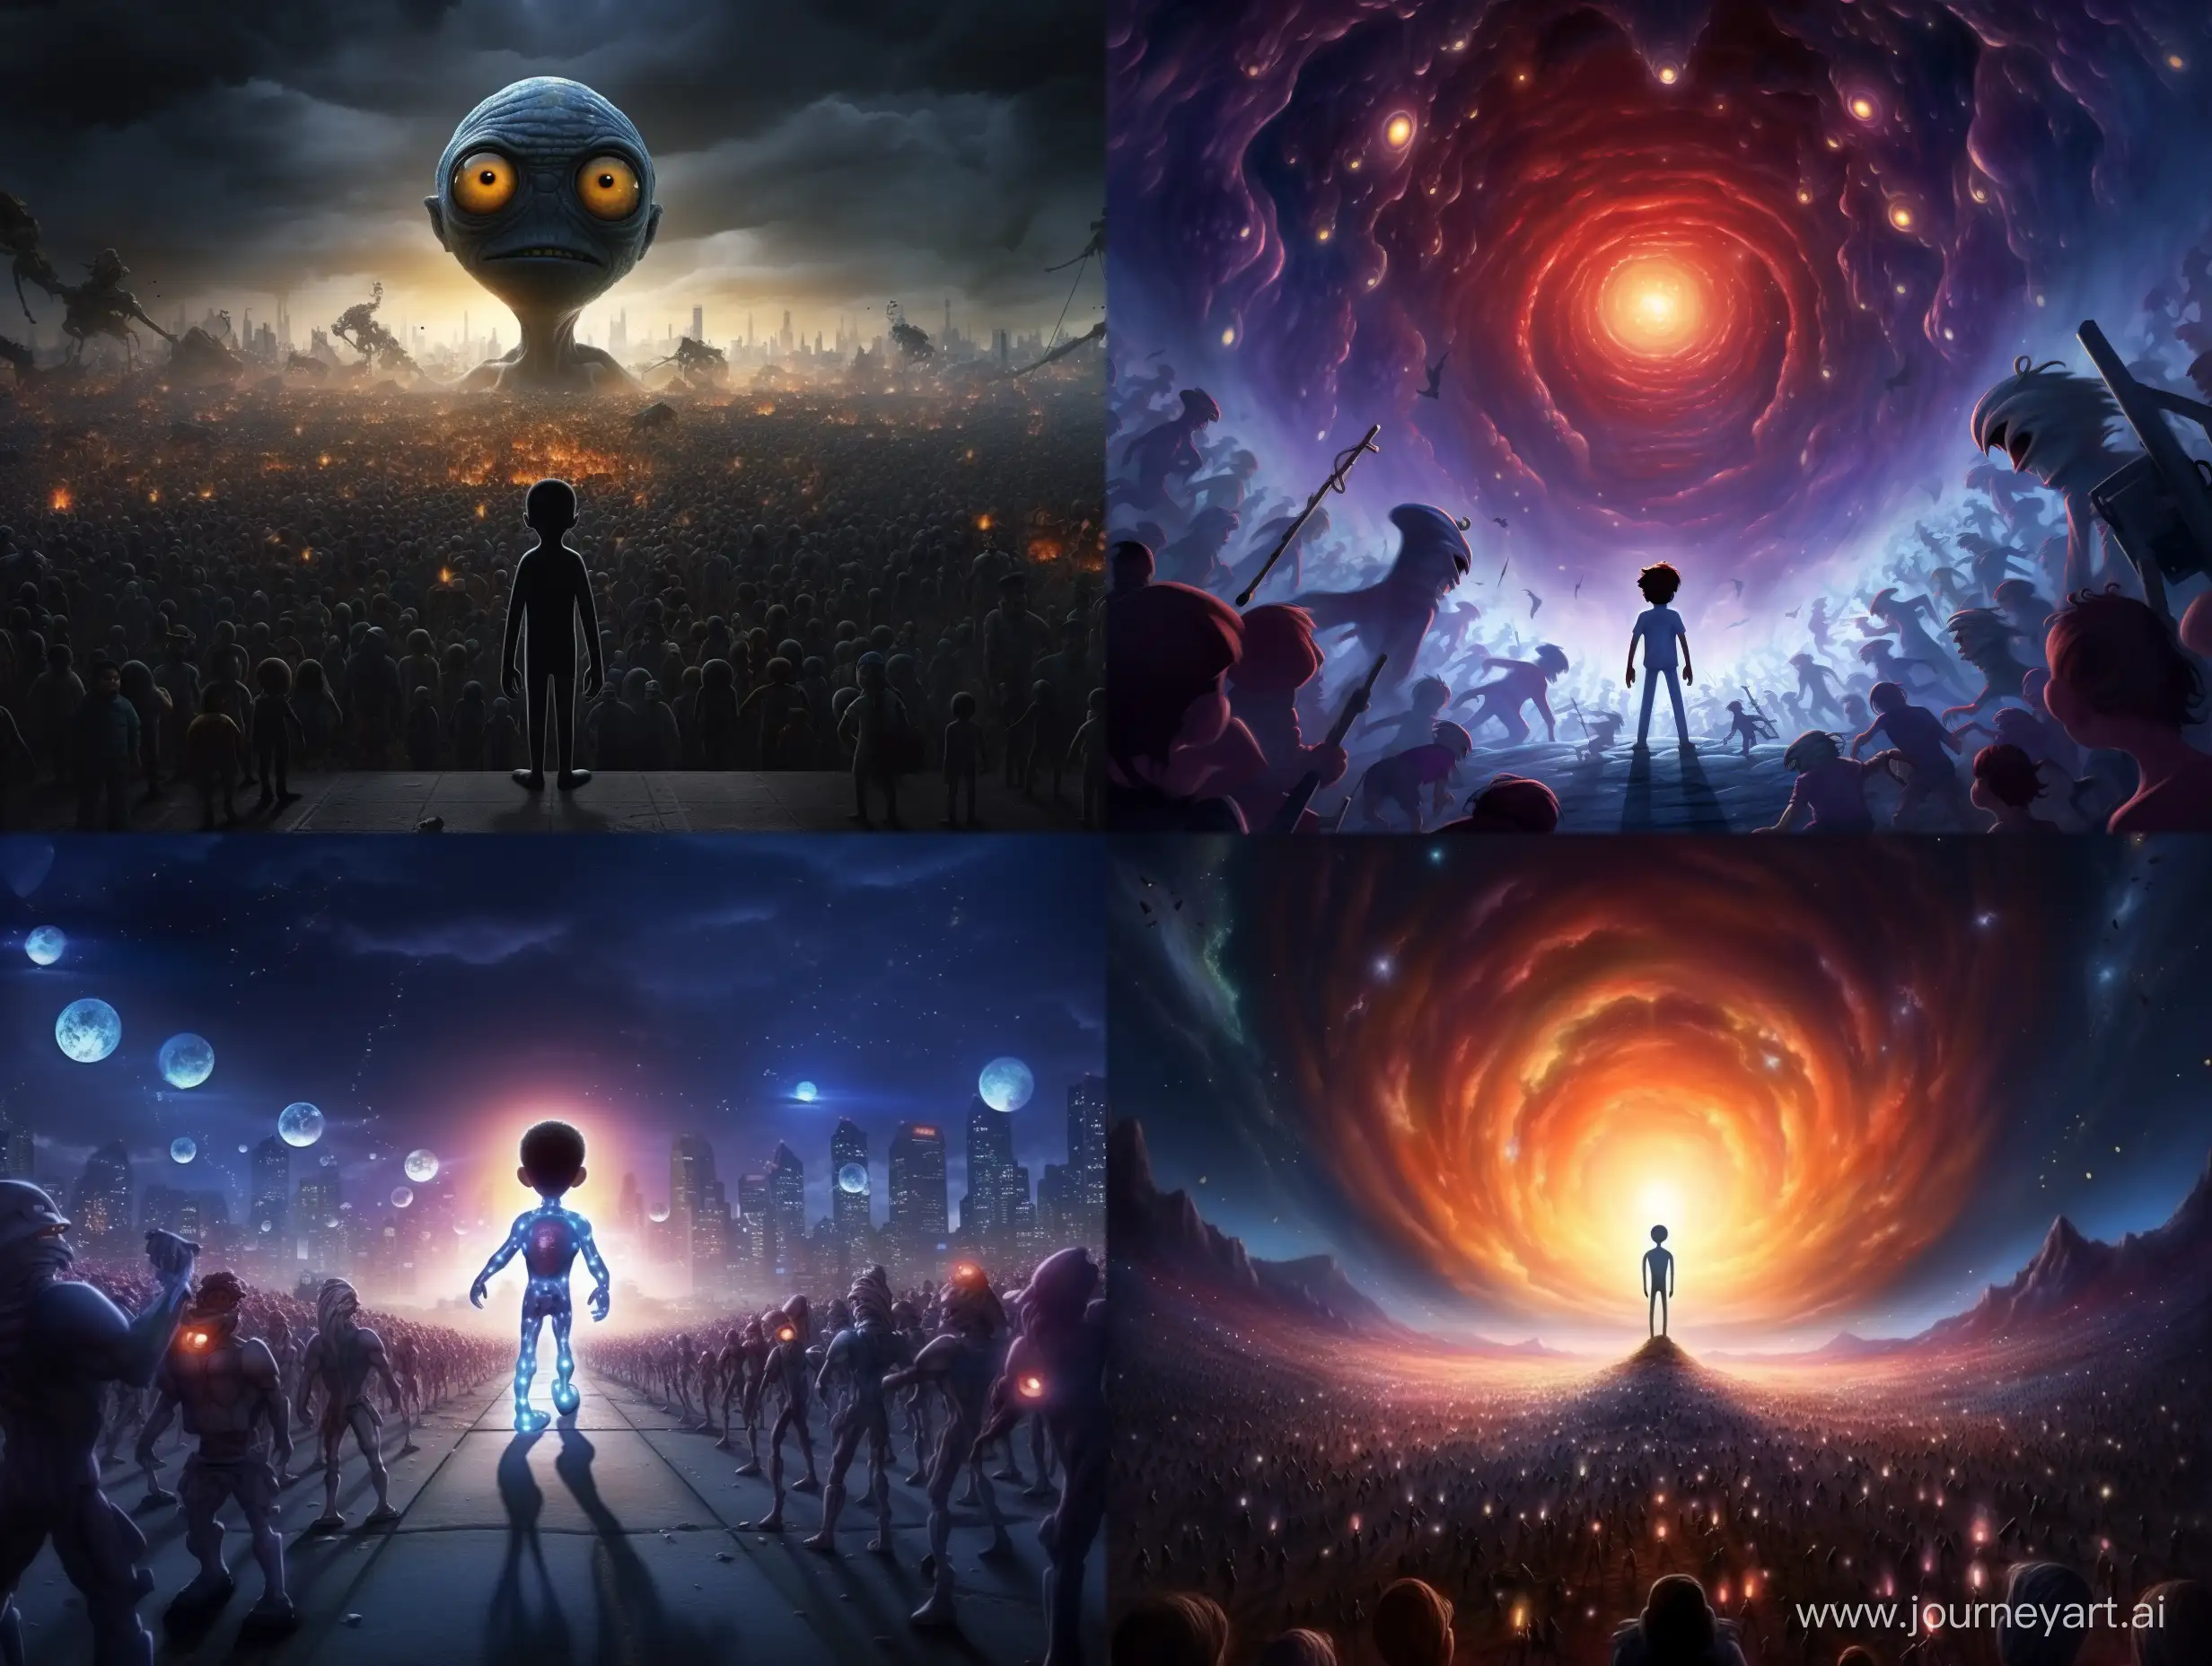 A Pixar poster about an alien race surviving a human invasion, called “Orion”.